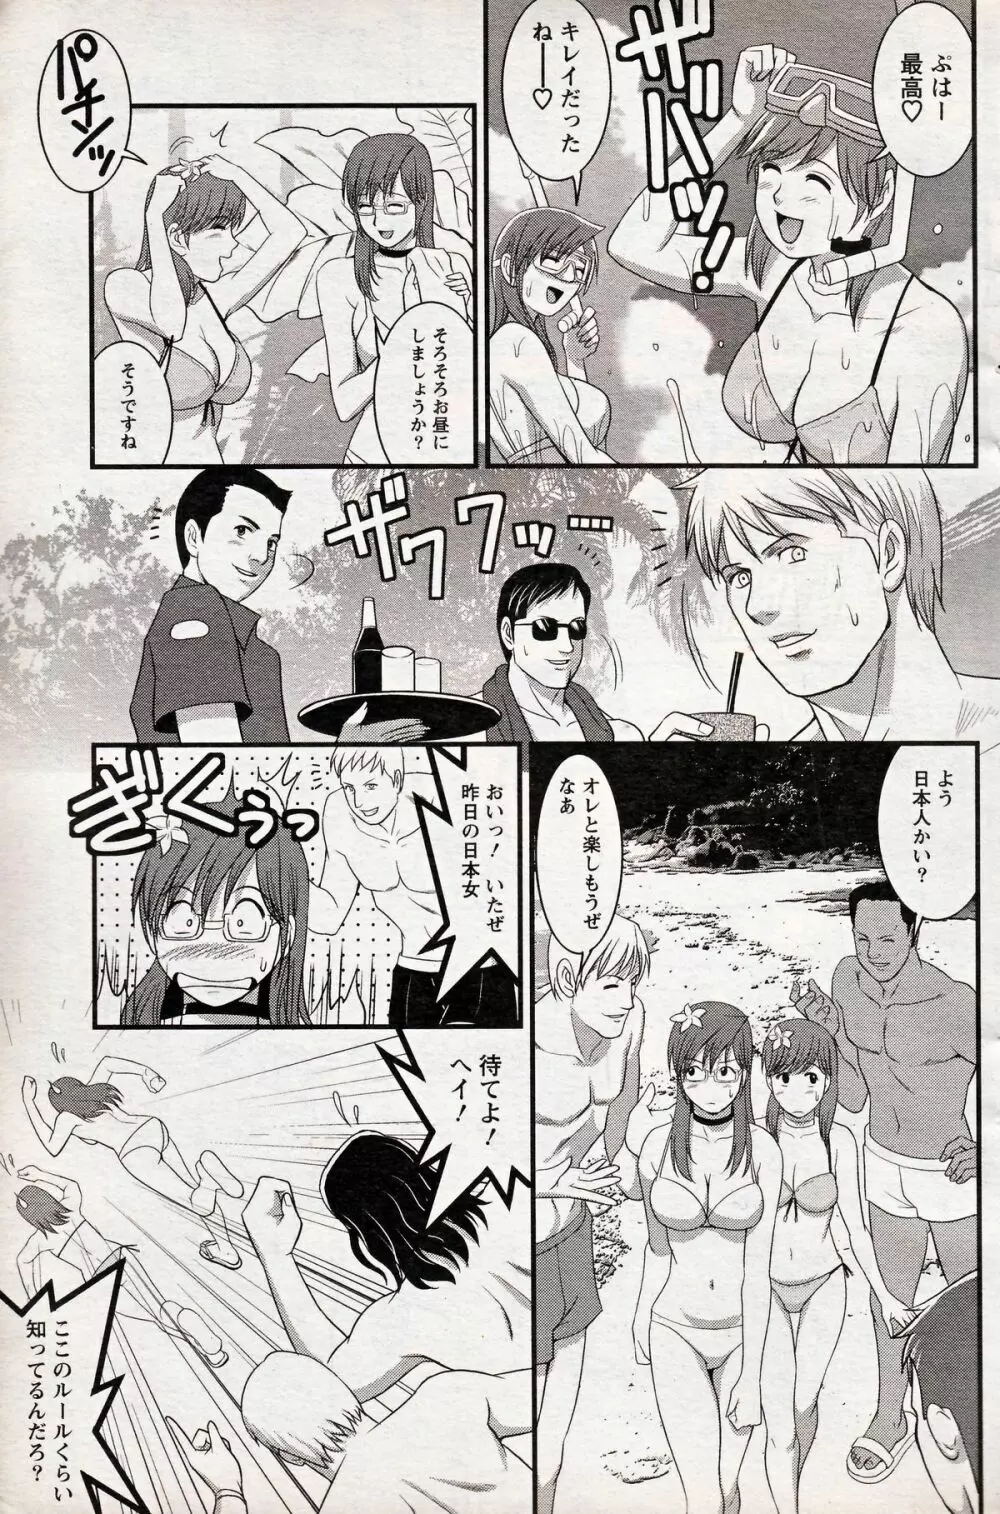 Haken no Muuko-san 16 11ページ